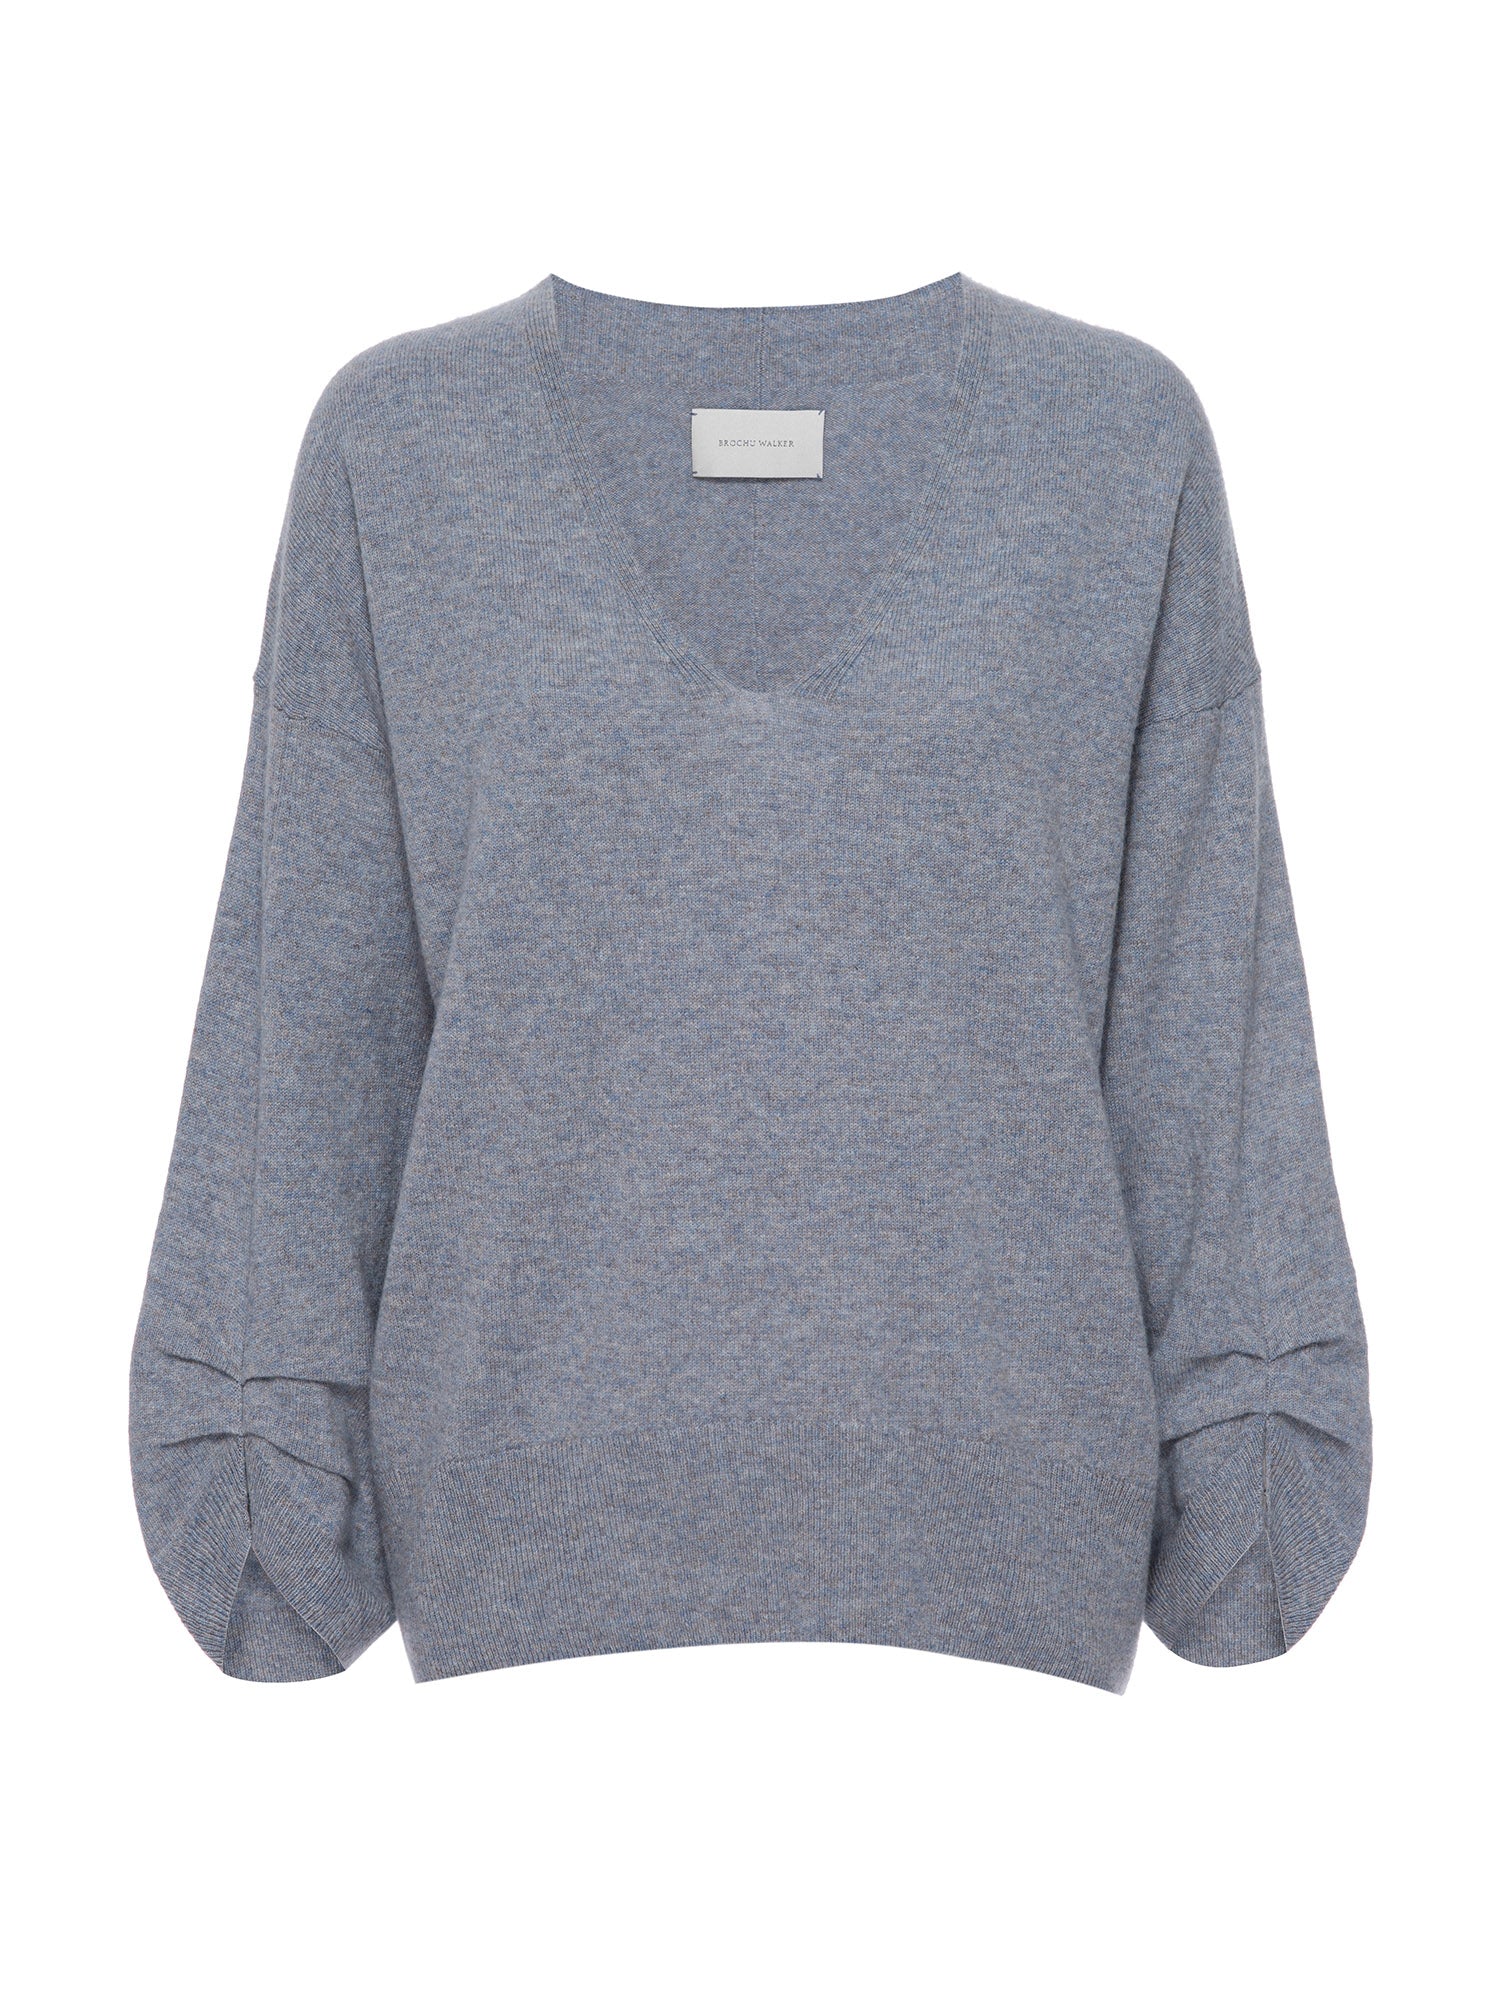 Casimir cashmere v-neck blue sweater flat view